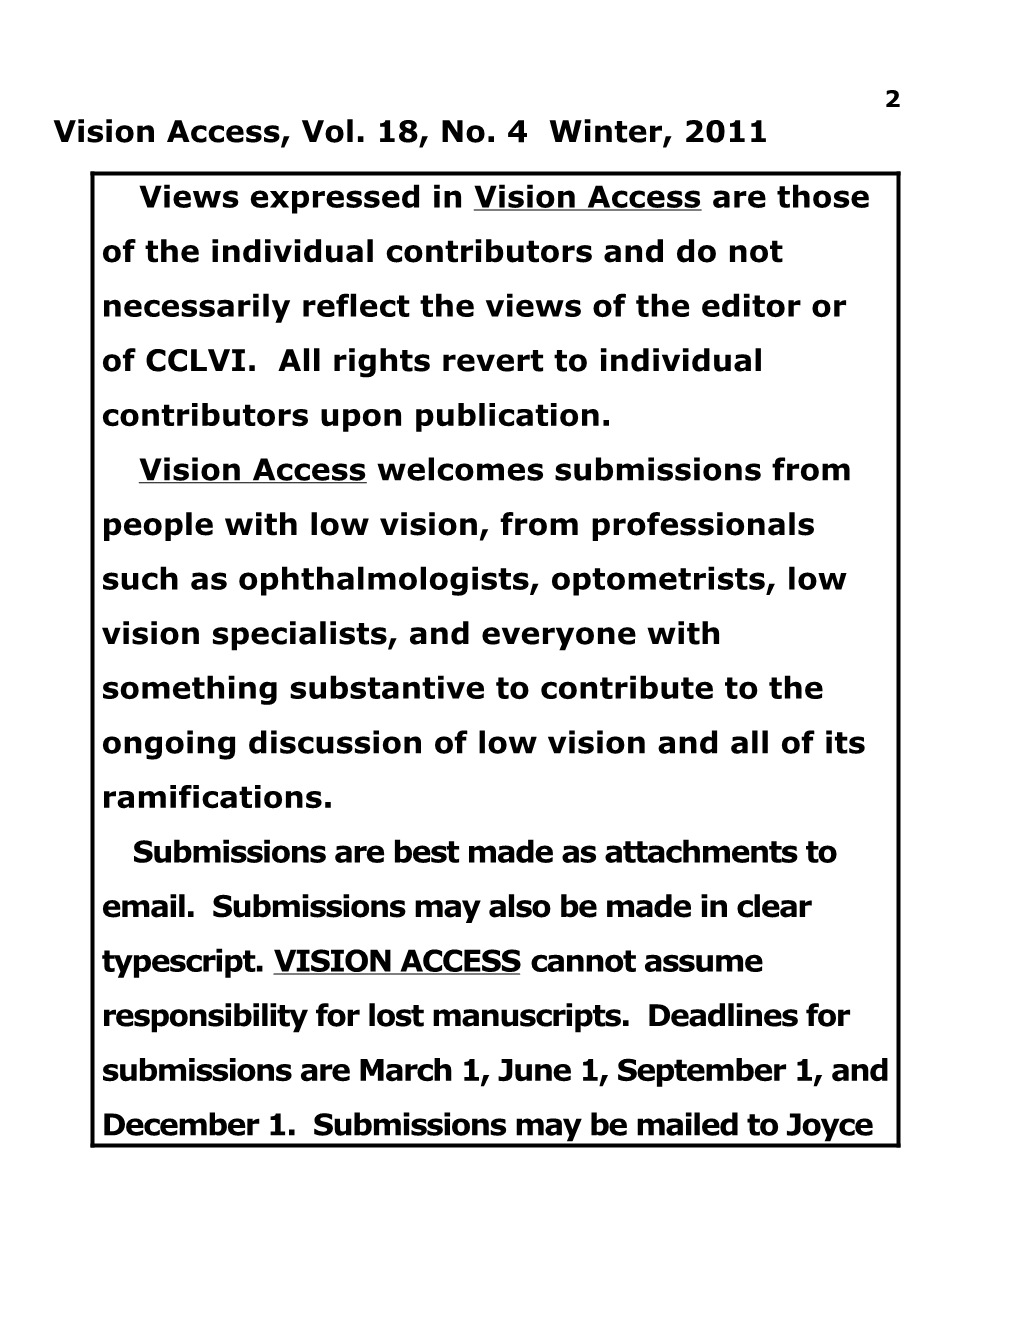 Vision Access, Vol. 18, No. 4 Winter, 2011